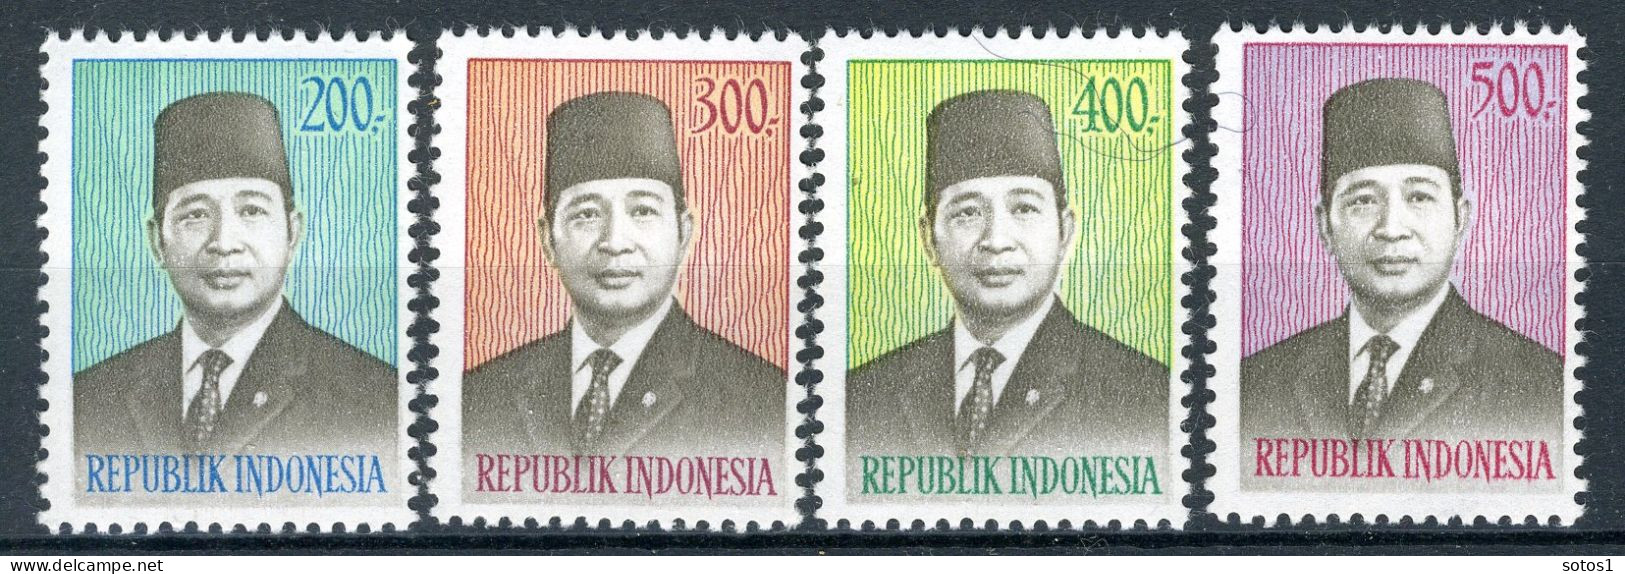 INDONESIE: ZB 855/858 MNH 1976 President Soeharto -5 - Indonésie